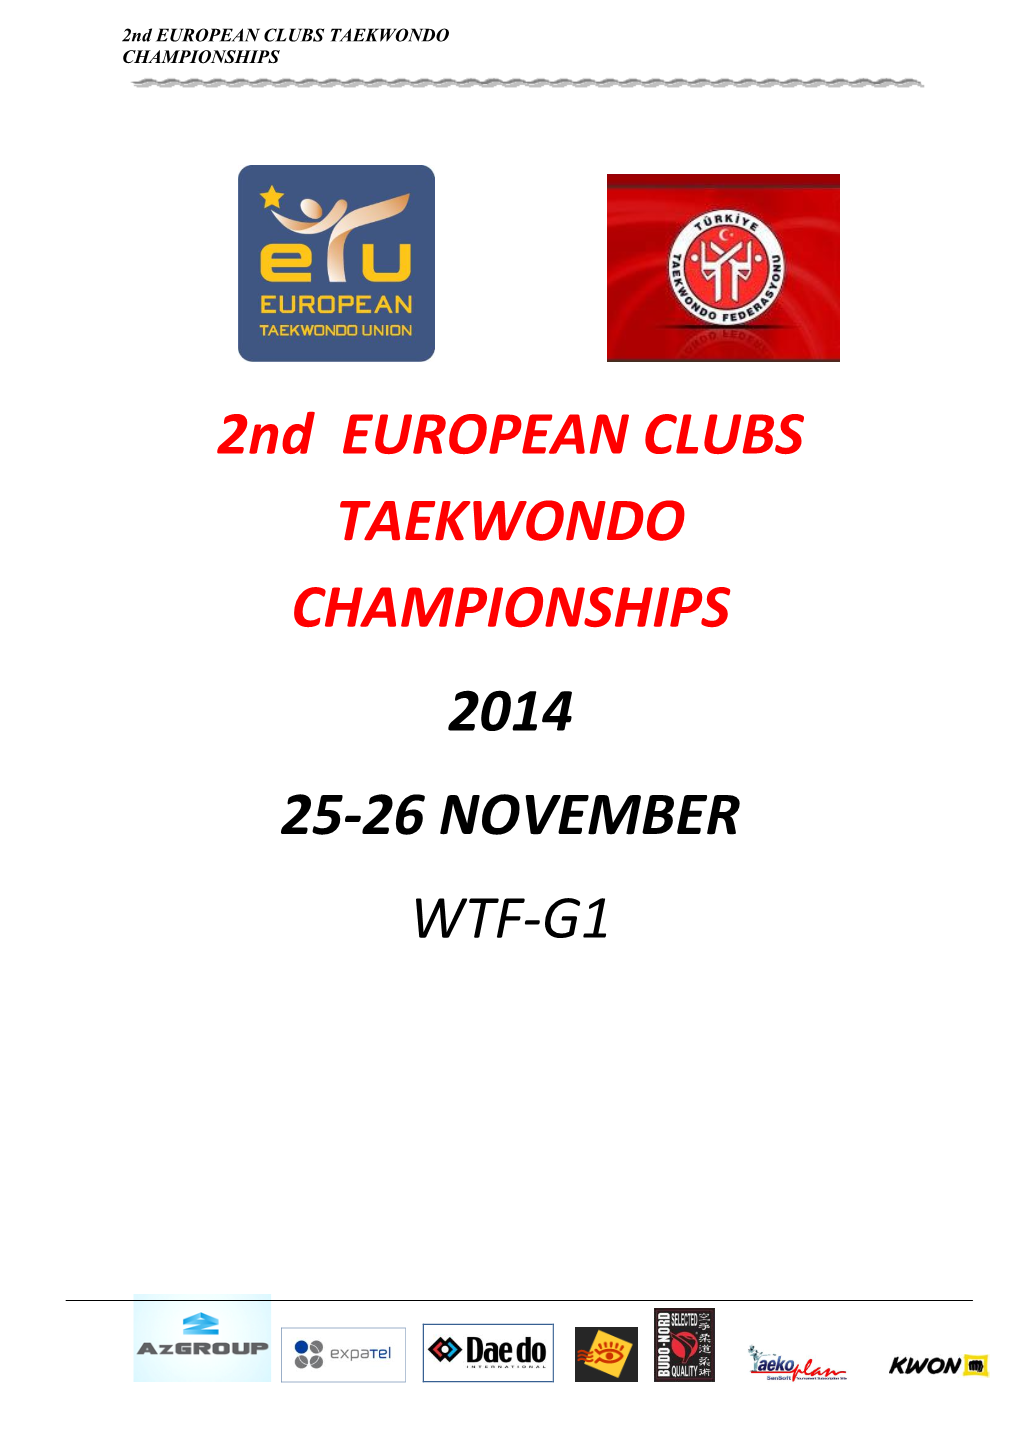 2Nd EUROPEAN CLUBS TAEKWONDO CHAMPIONSHIPS 2014 25-26 NOVEMBER WTF-G1